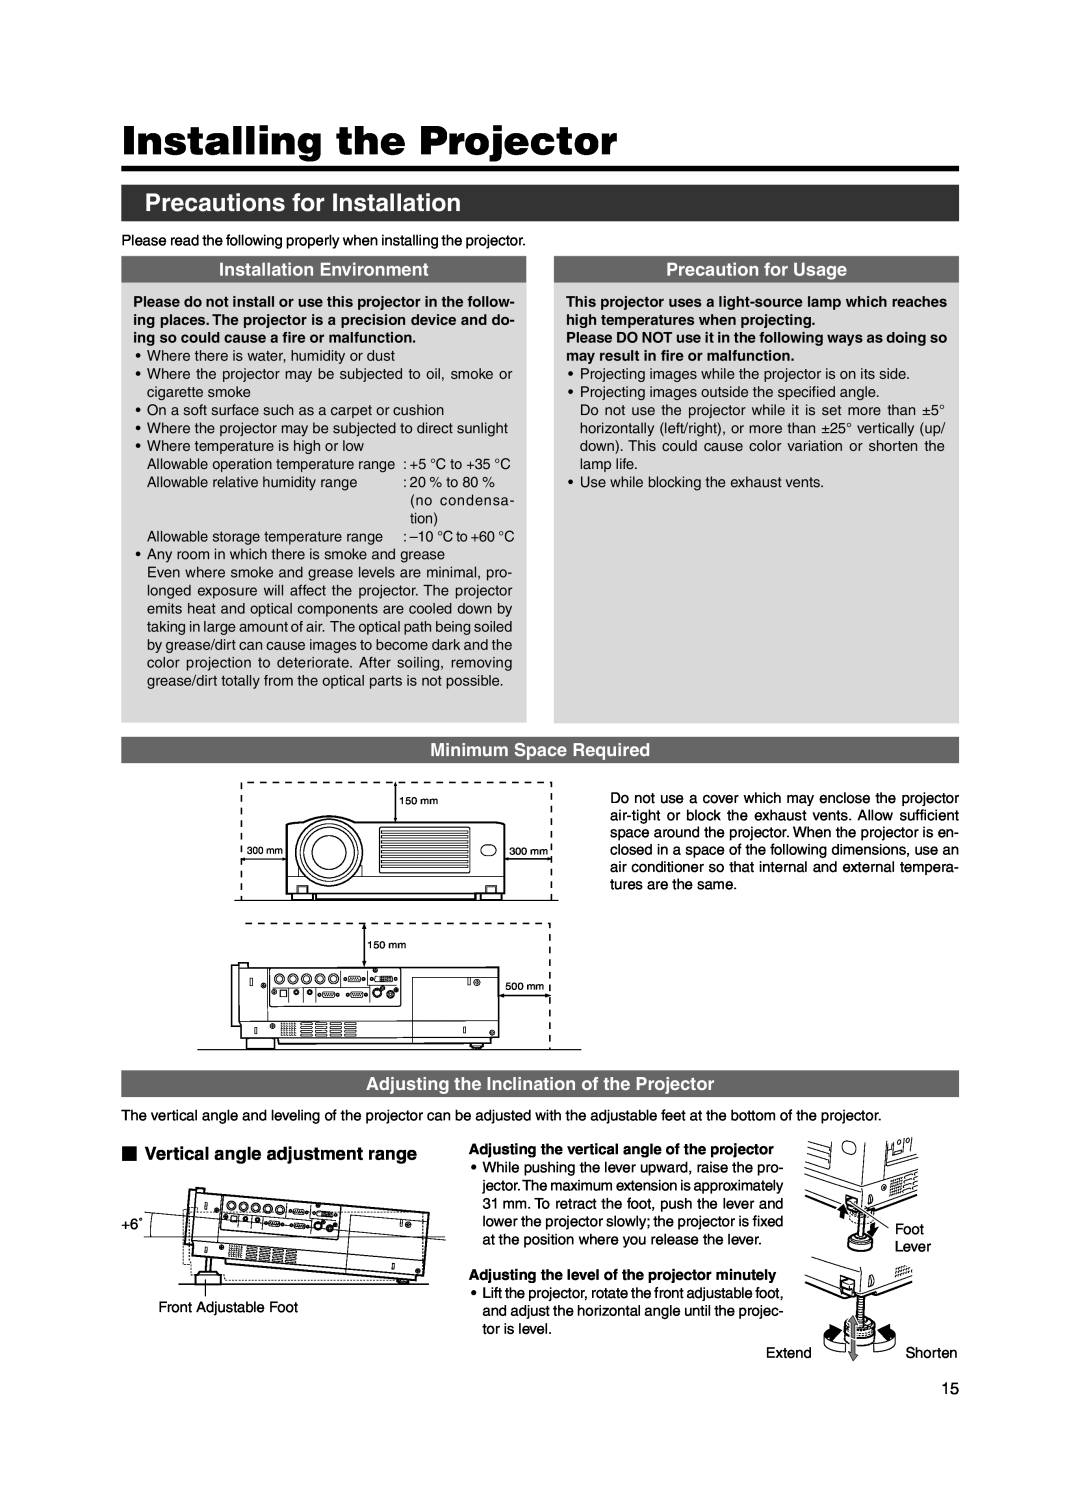 JVC Model DLA-HX1E Installing the Projector, Precautions for Installation, Installation Environment, Precaution for Usage 